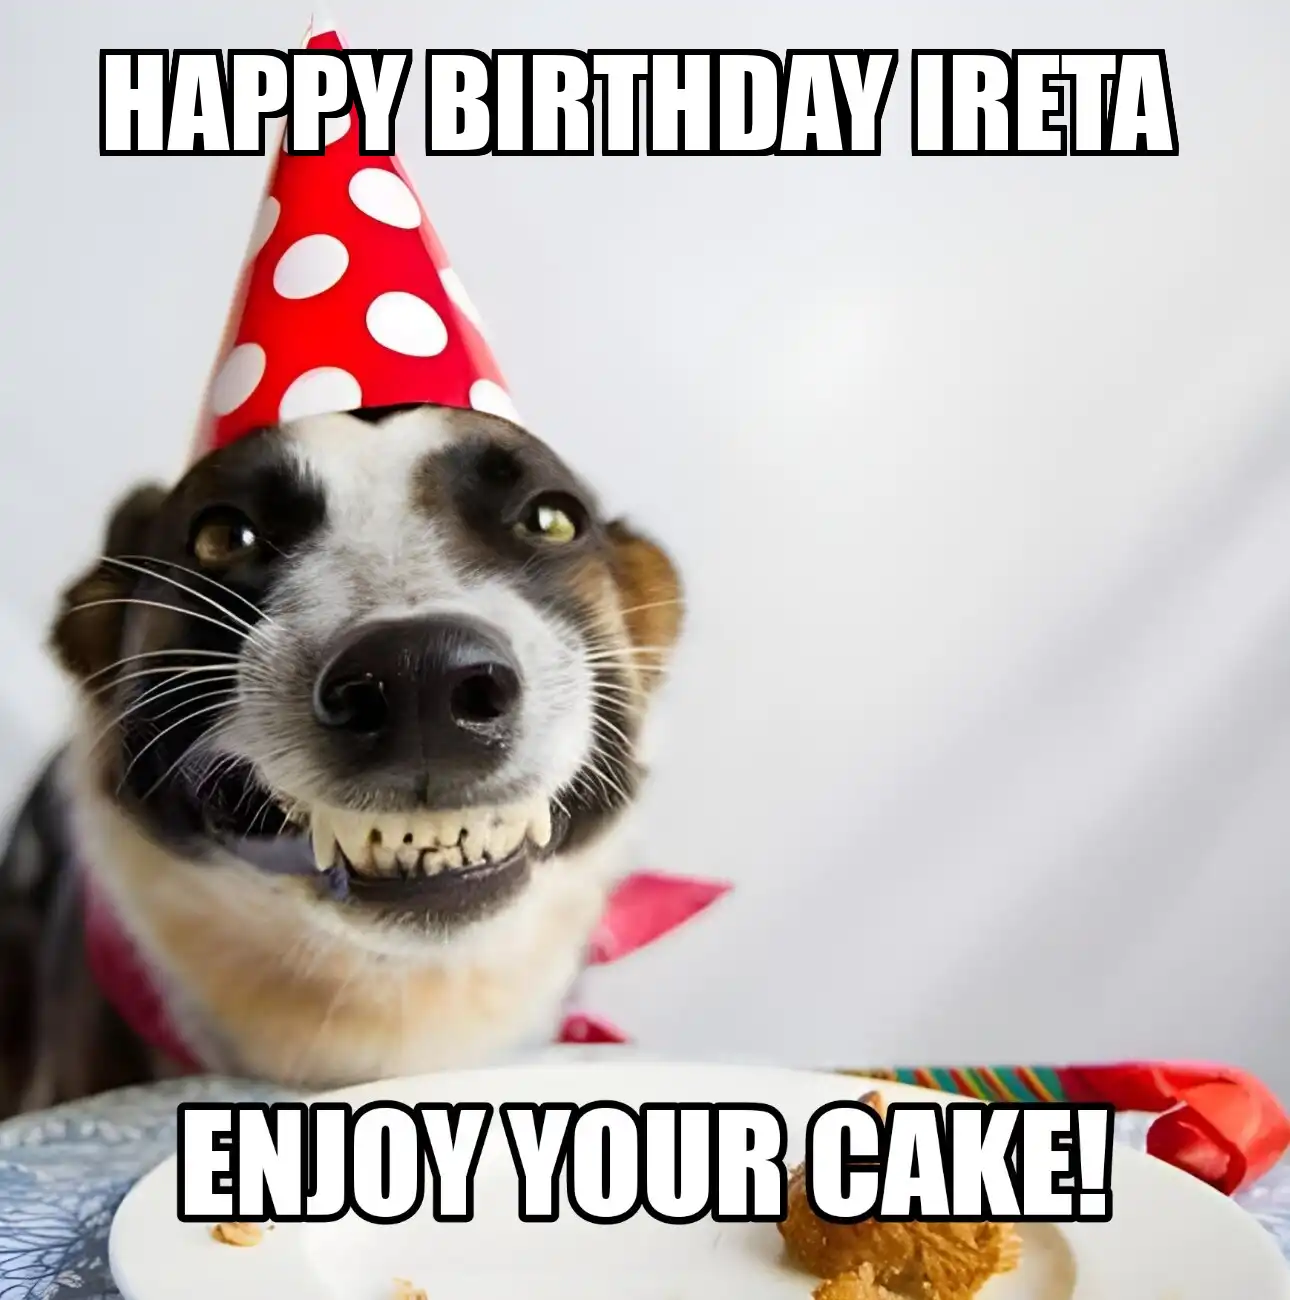 Happy Birthday Ireta Enjoy Your Cake Dog Meme